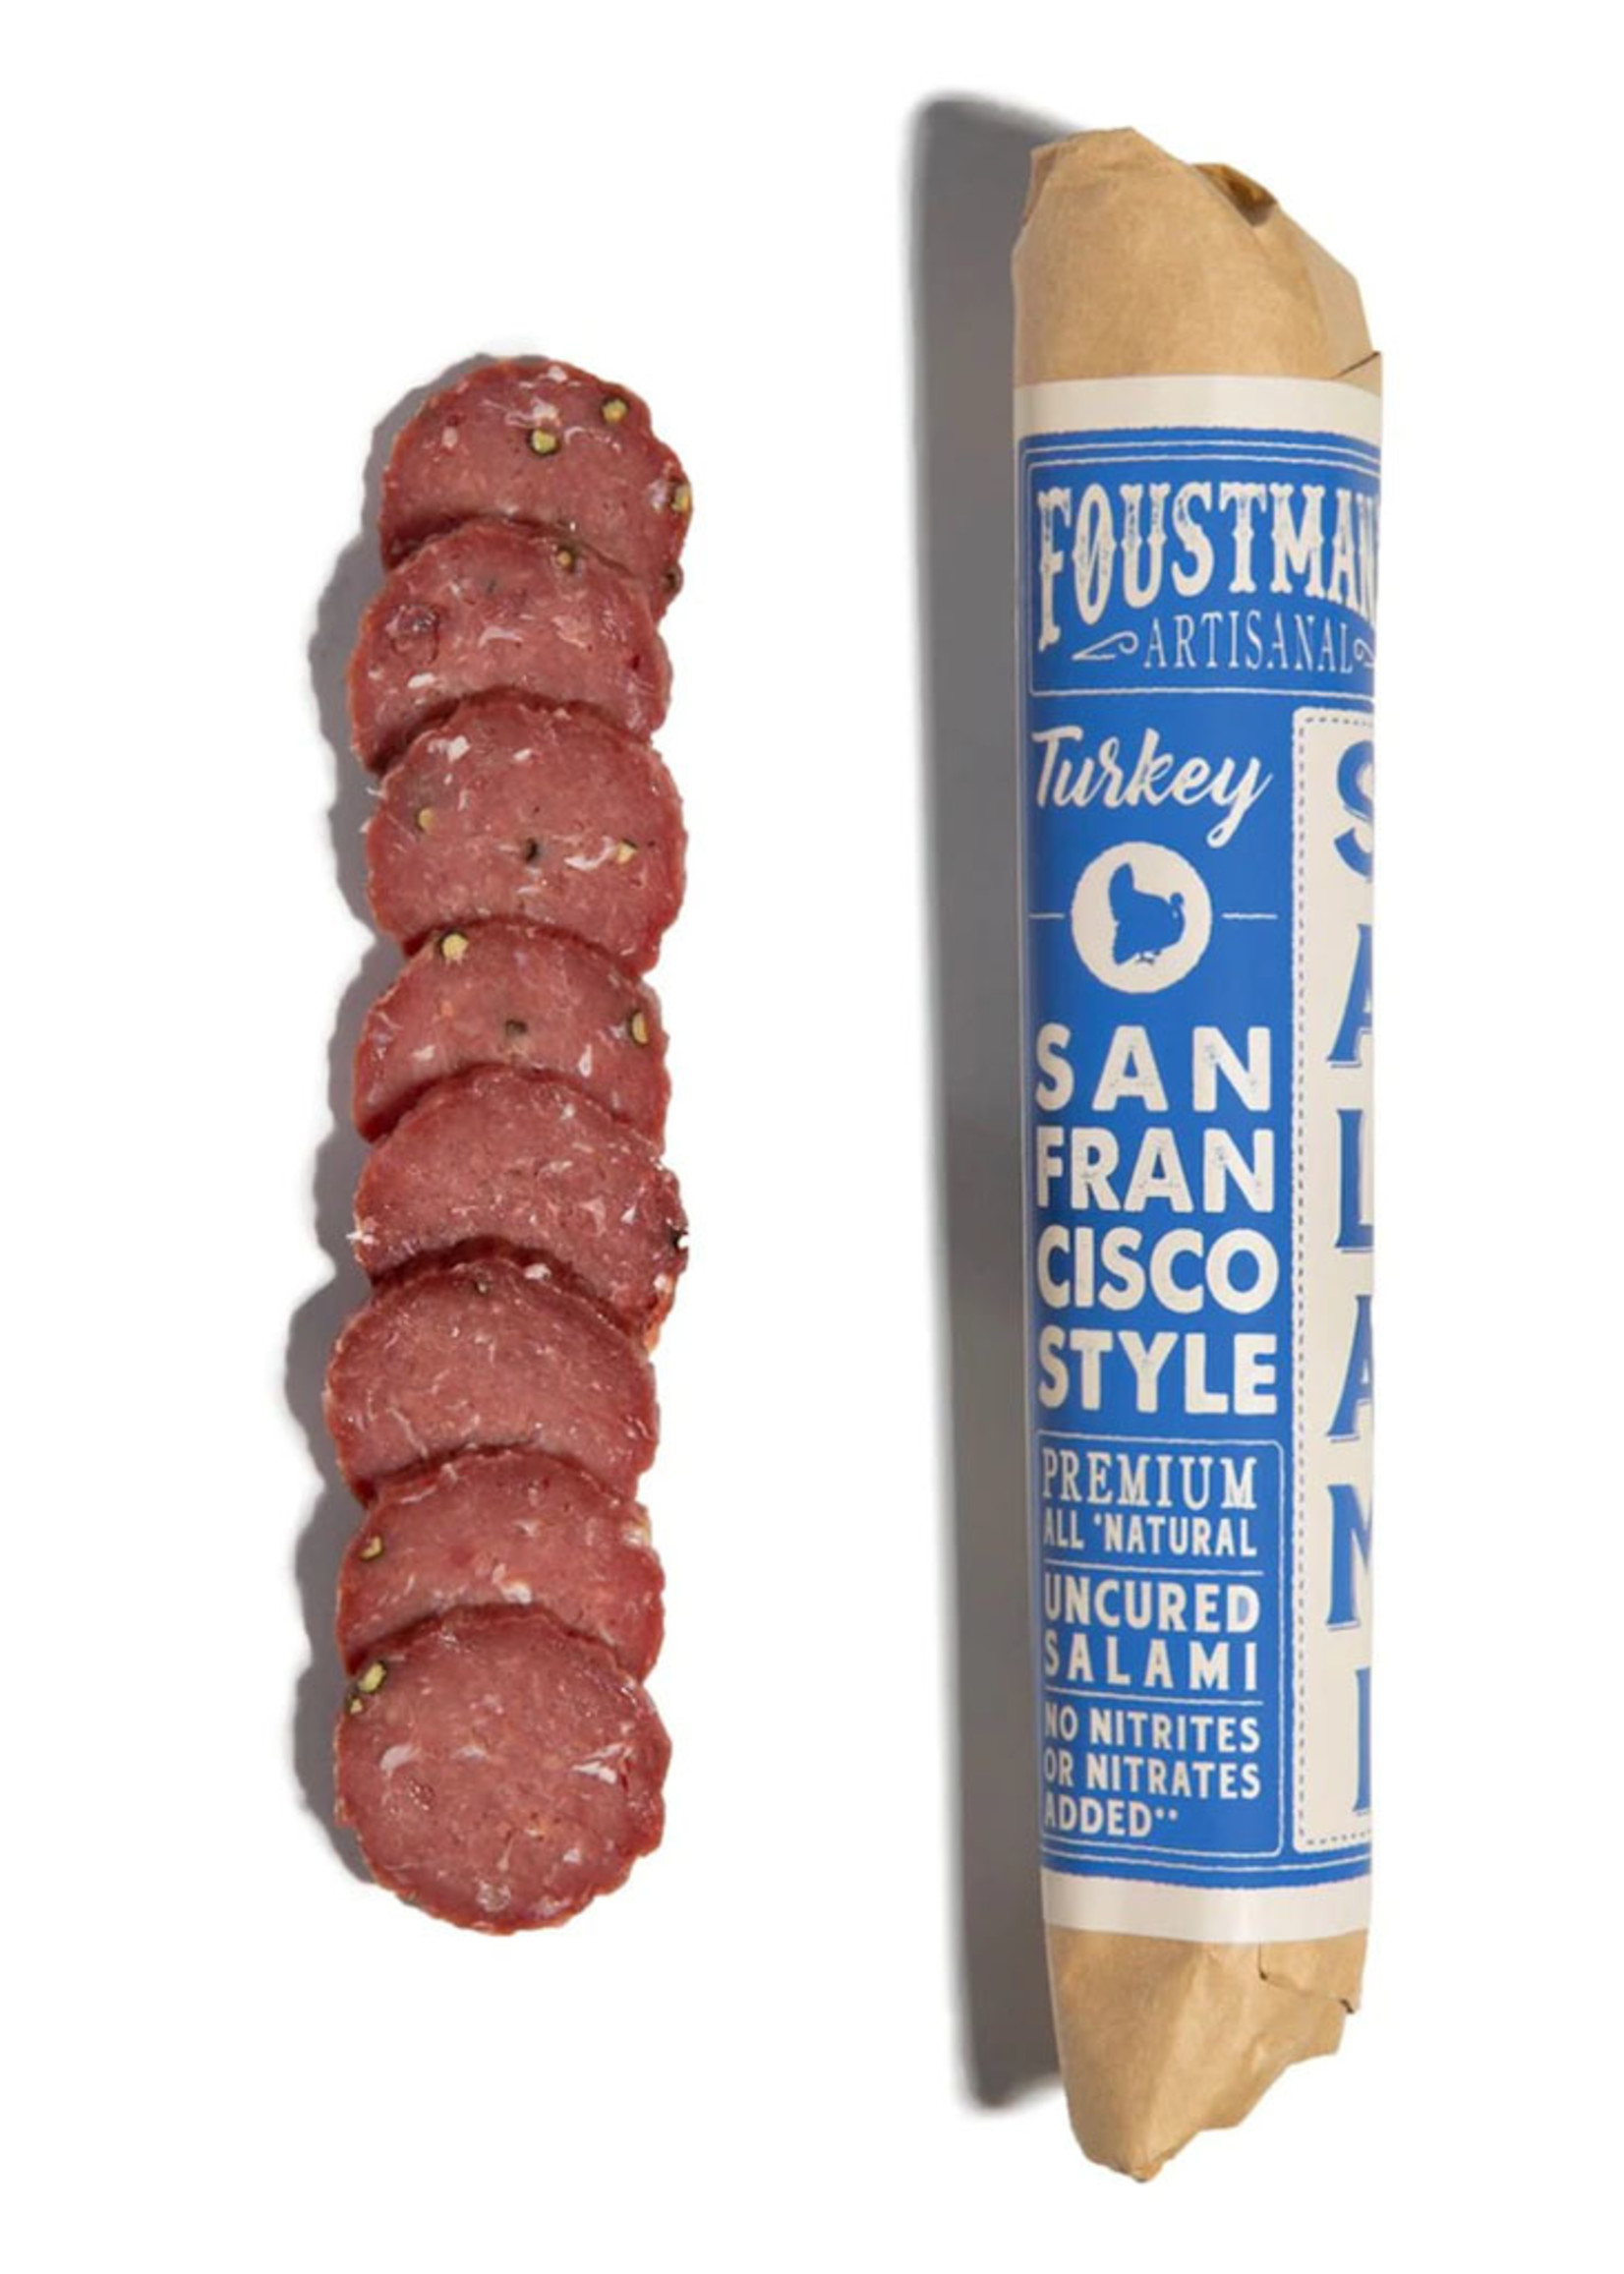 Foustman's Salami Turkey San Franisco Style Uncured Salami 8oz